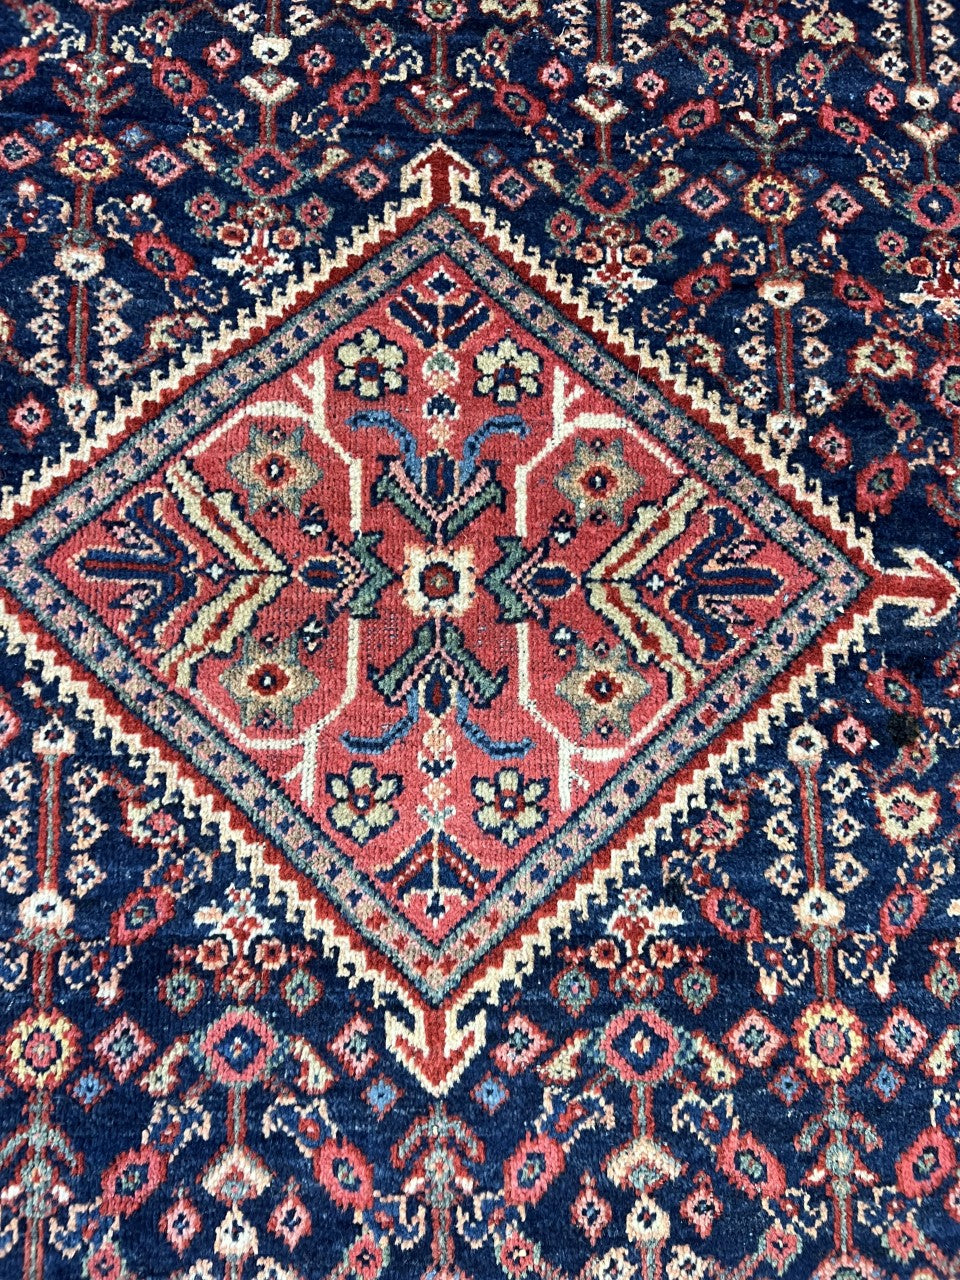 Amazing old antique handmade Mahal rug - Hakiemie Rug Gallery